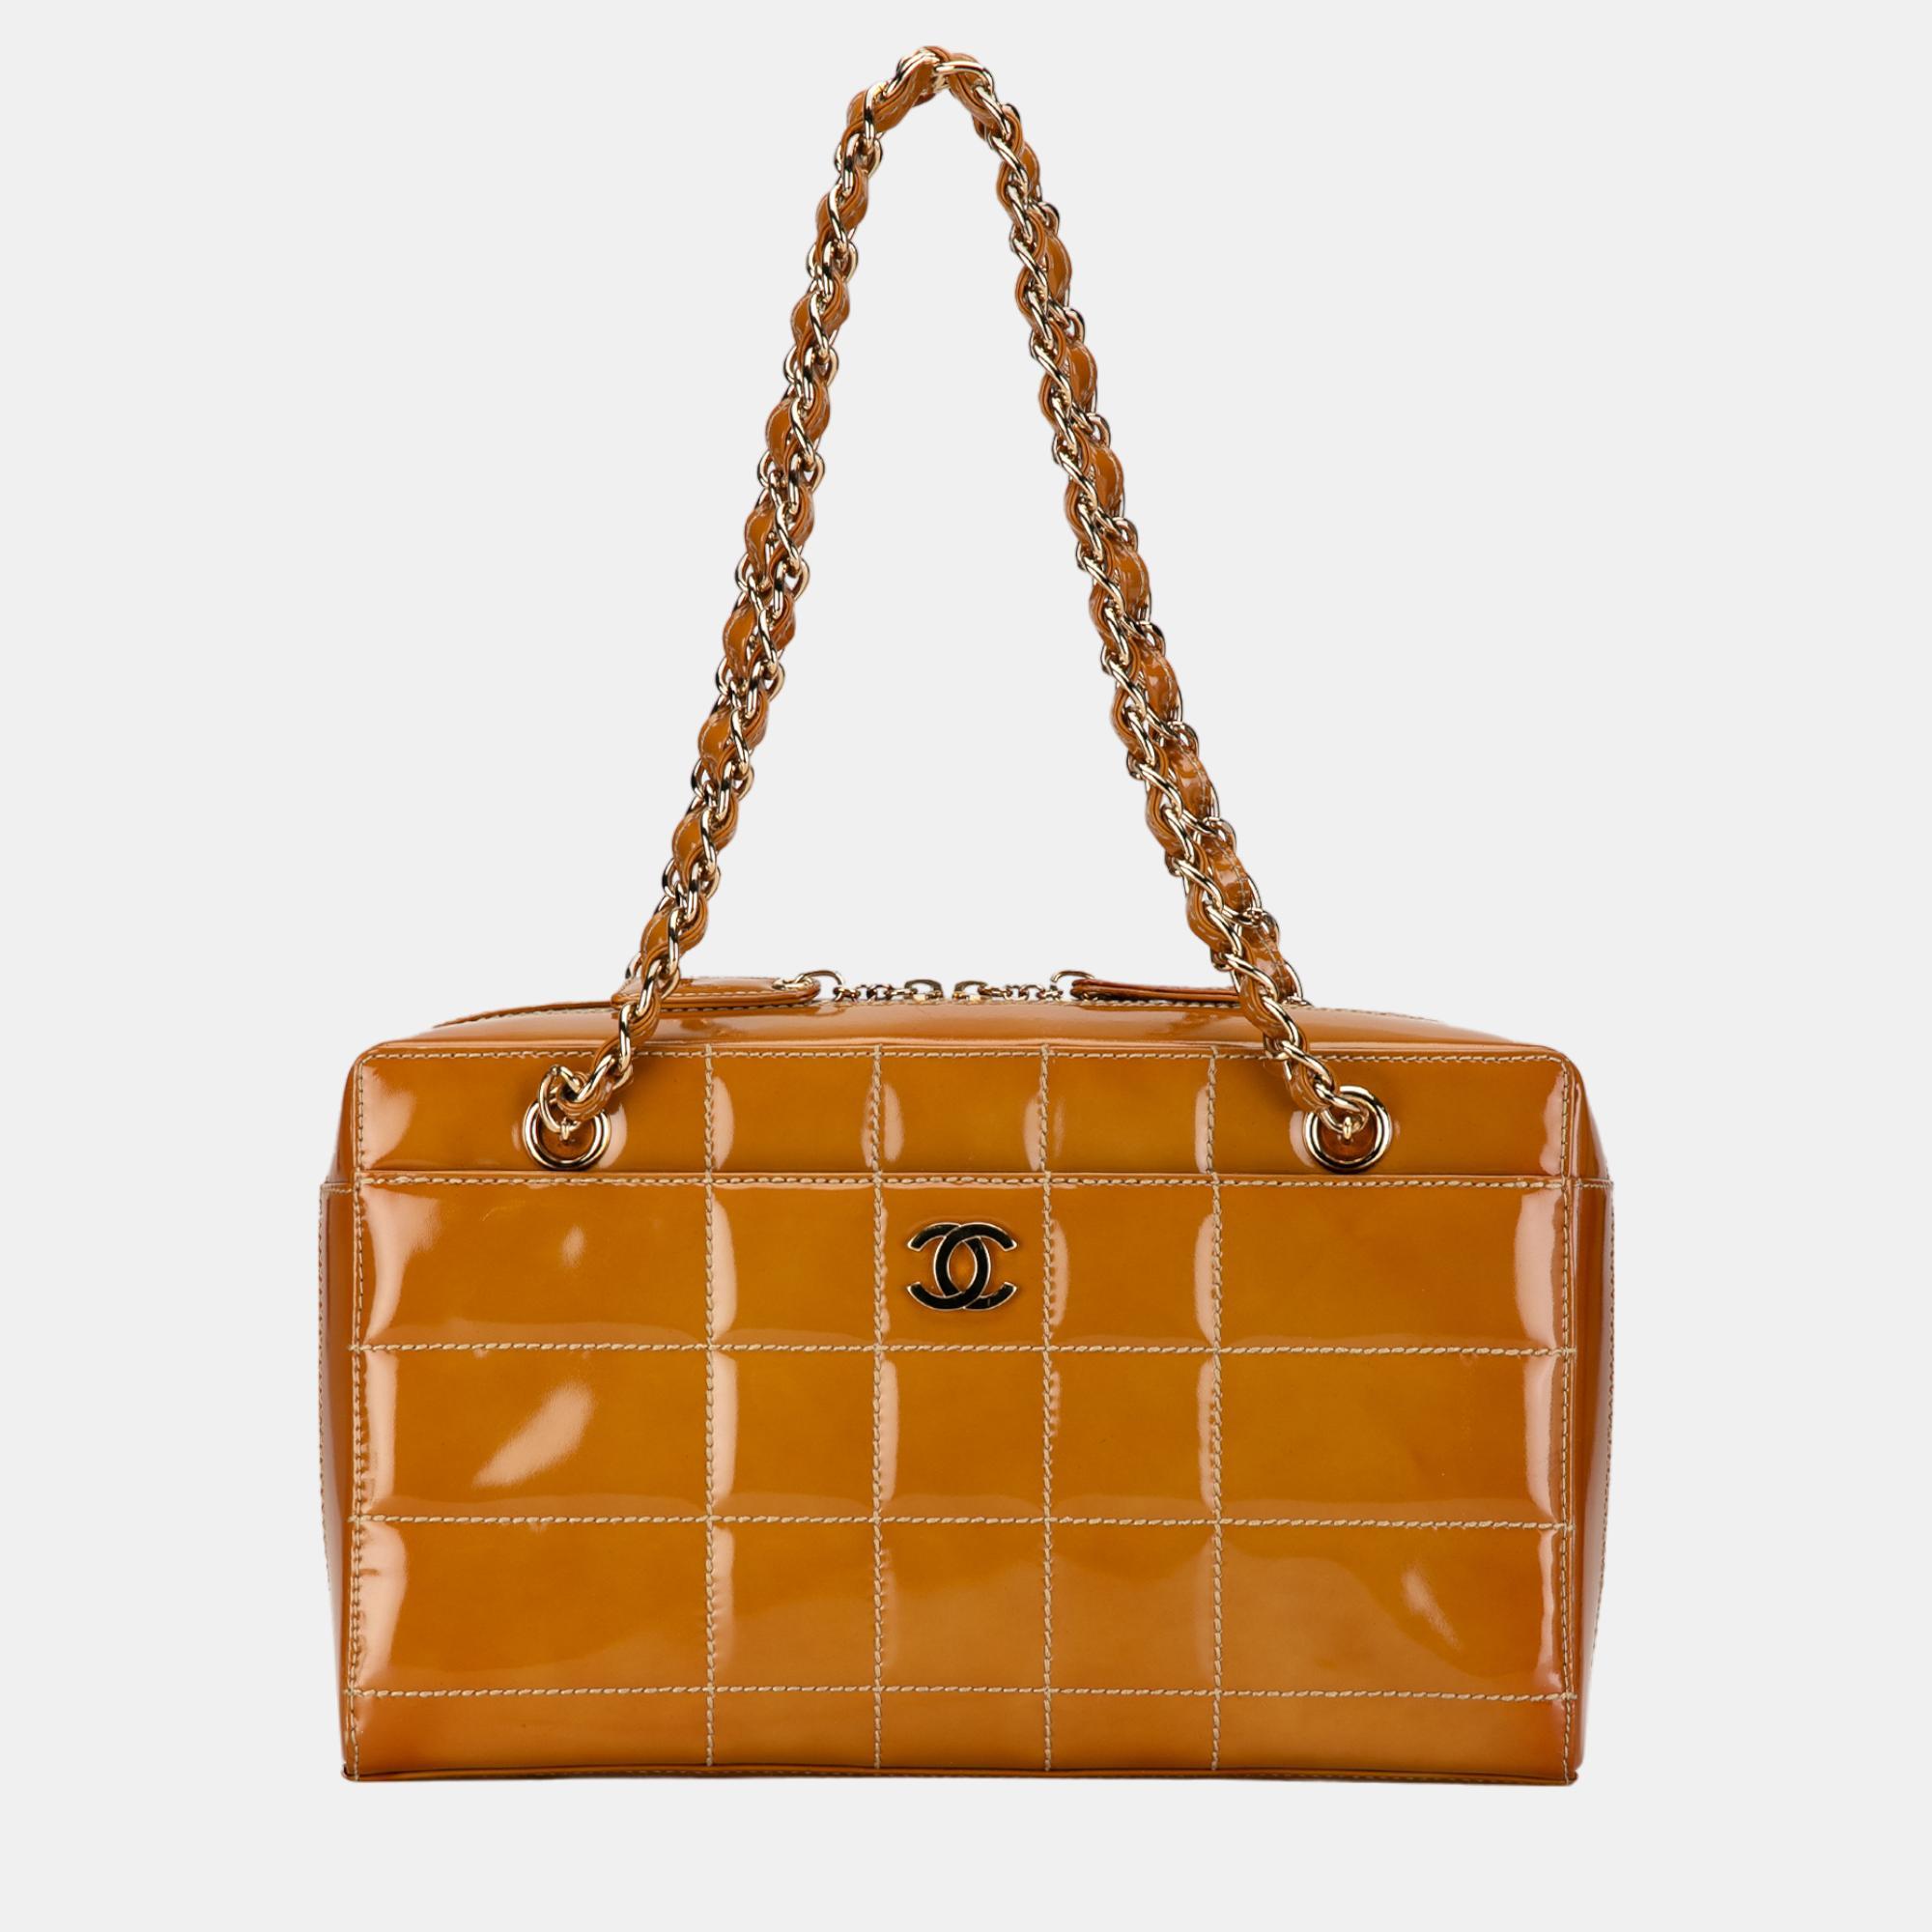 Chanel brown cc chocolate bar patent shoulder bag